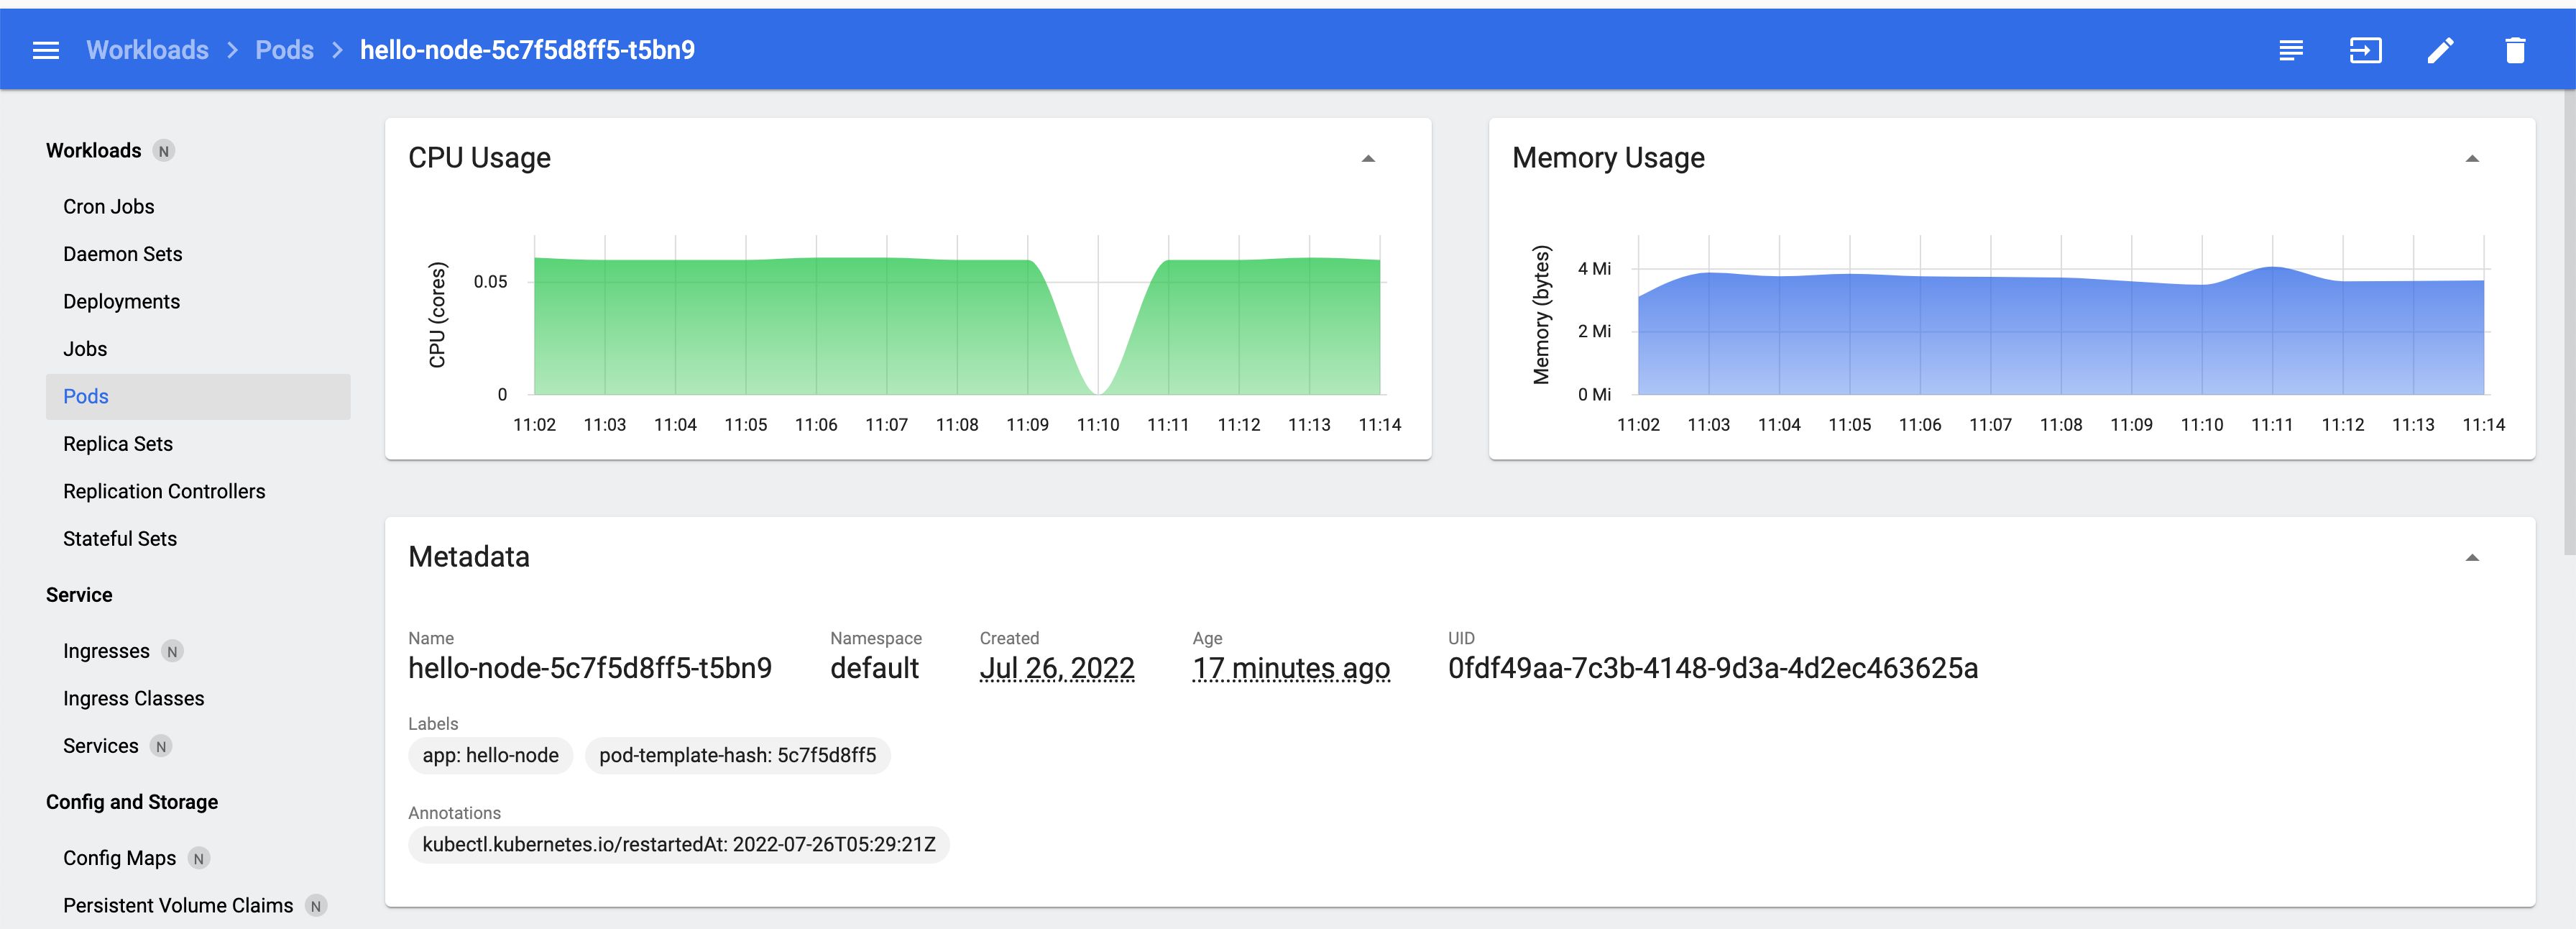 CPU and memory usage